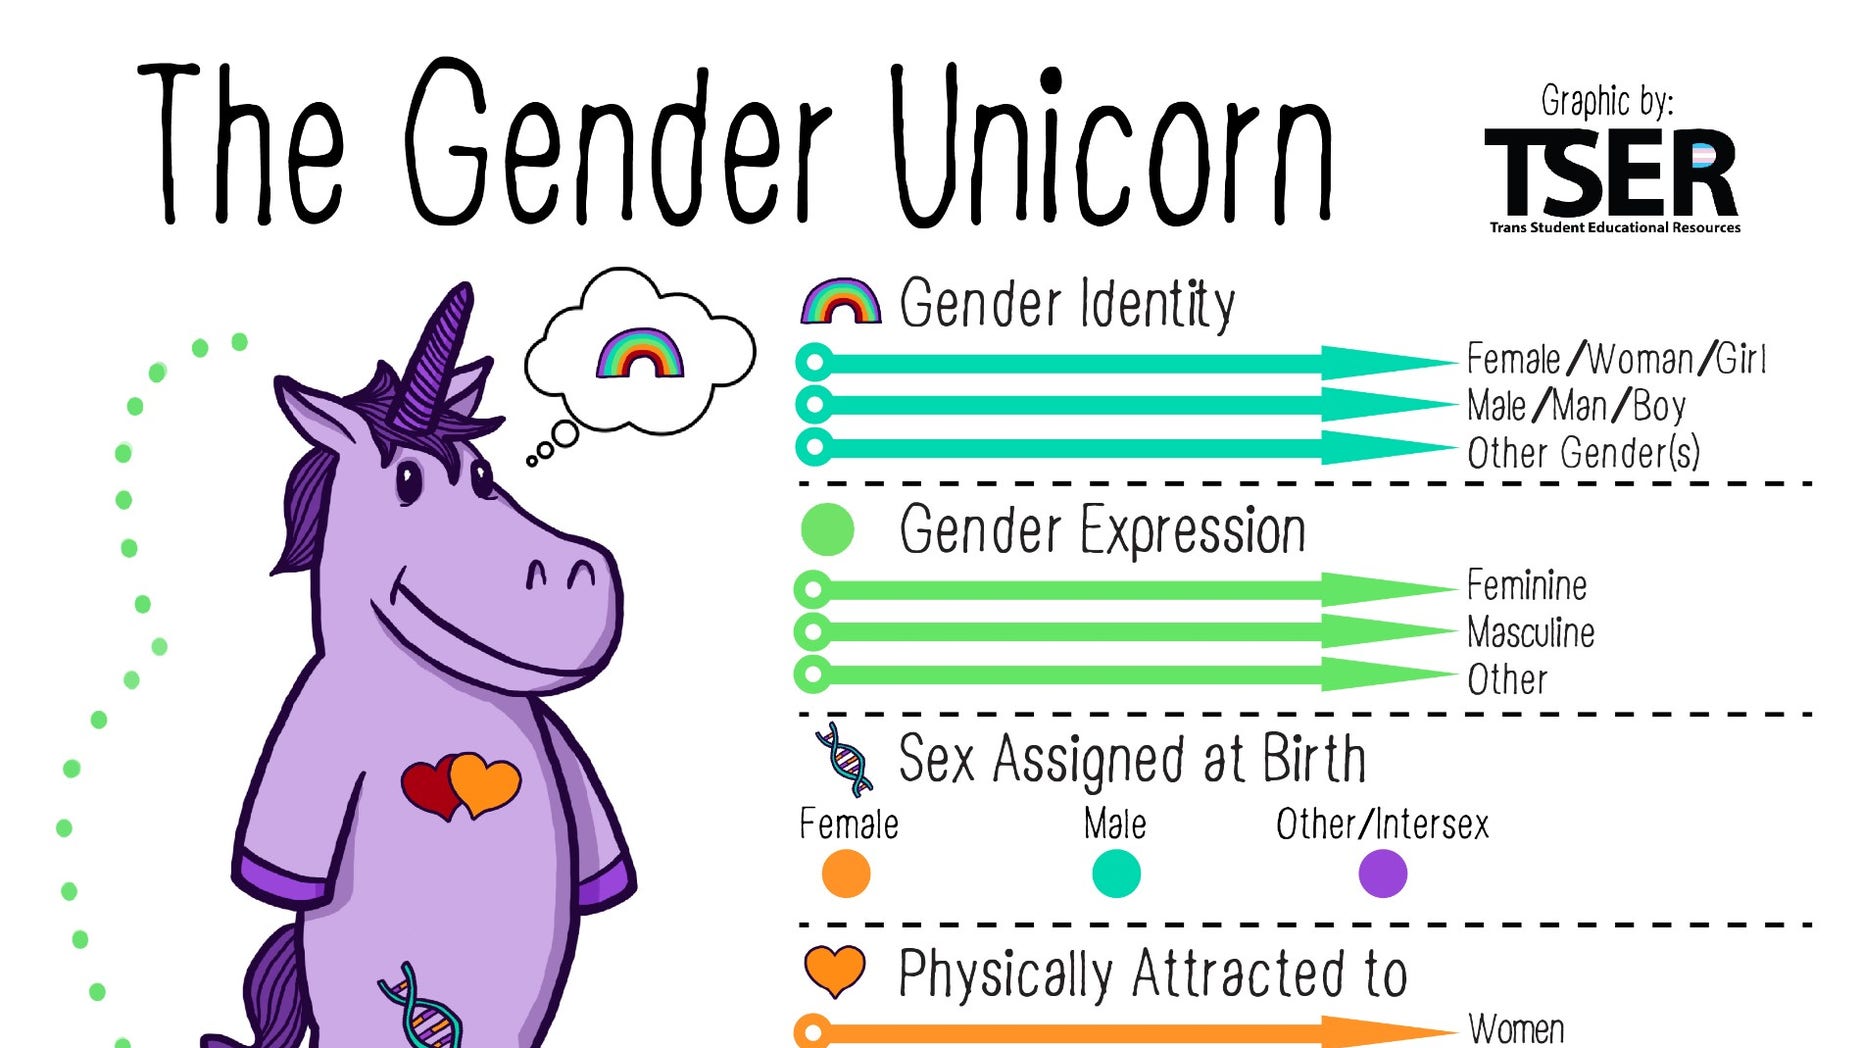 Grade school uses sex columnist, unicorn to promote gender identity | Fox News